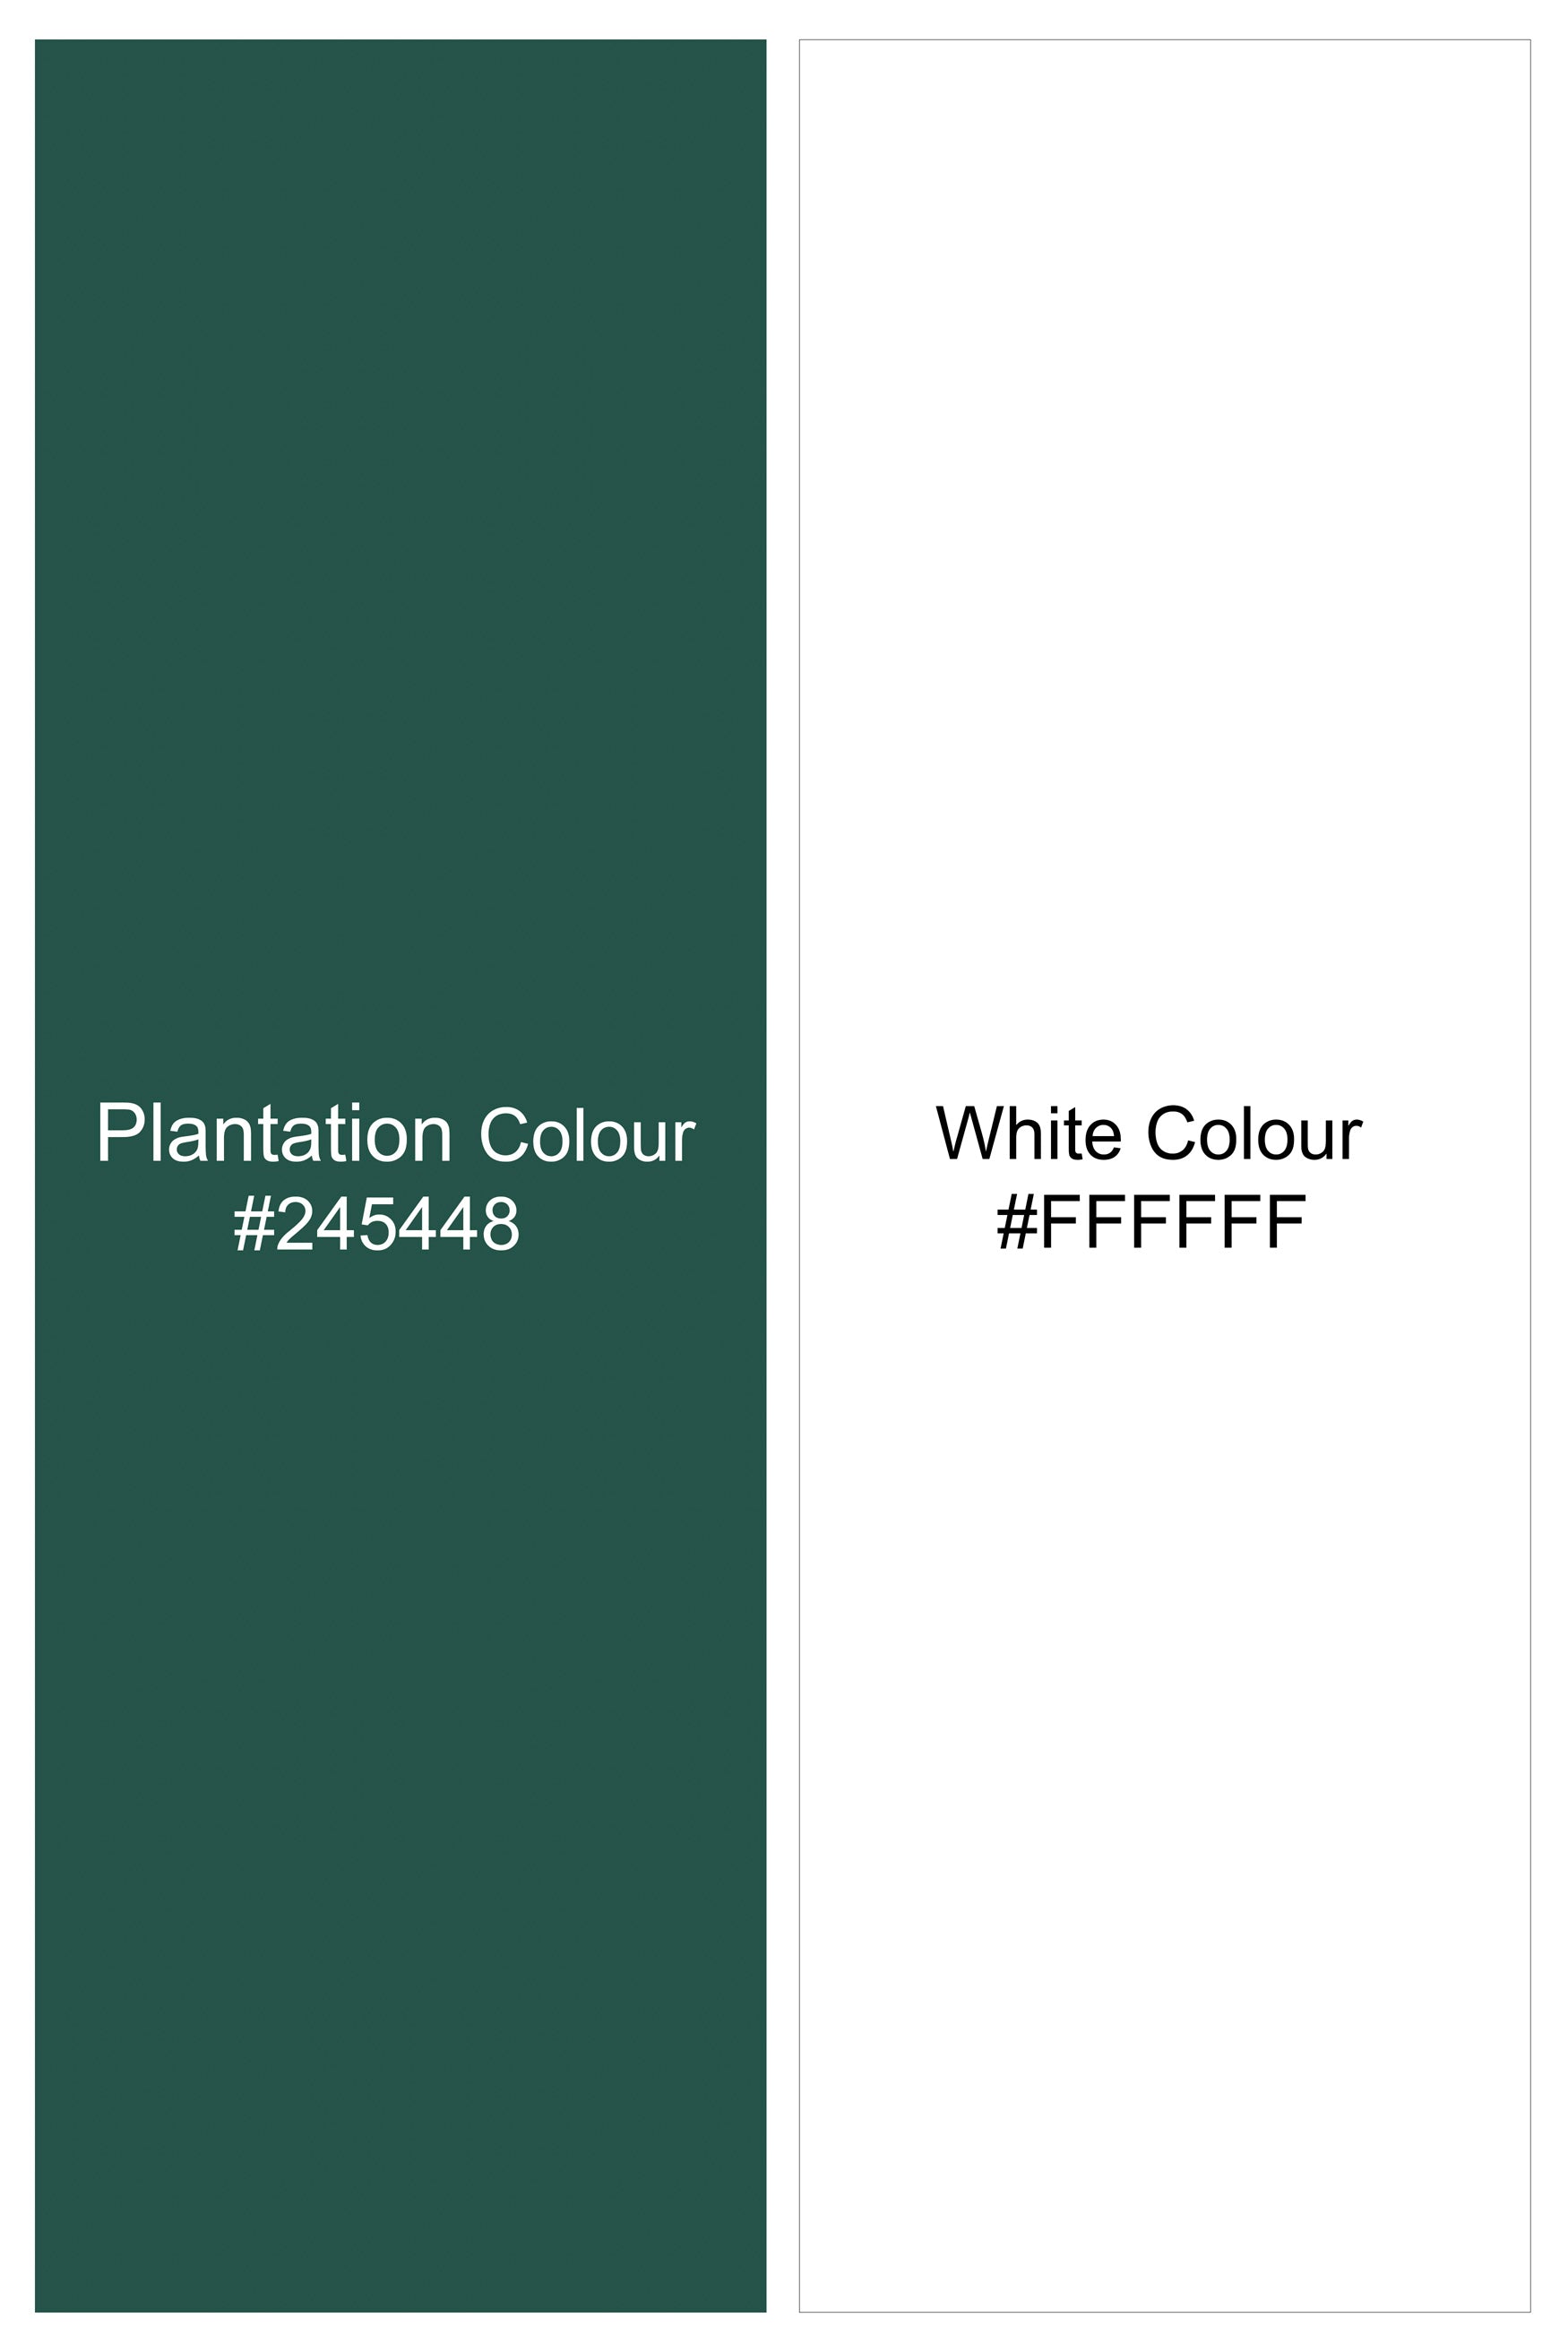 Plantation Green with white plaid dobby premium cotton shirt